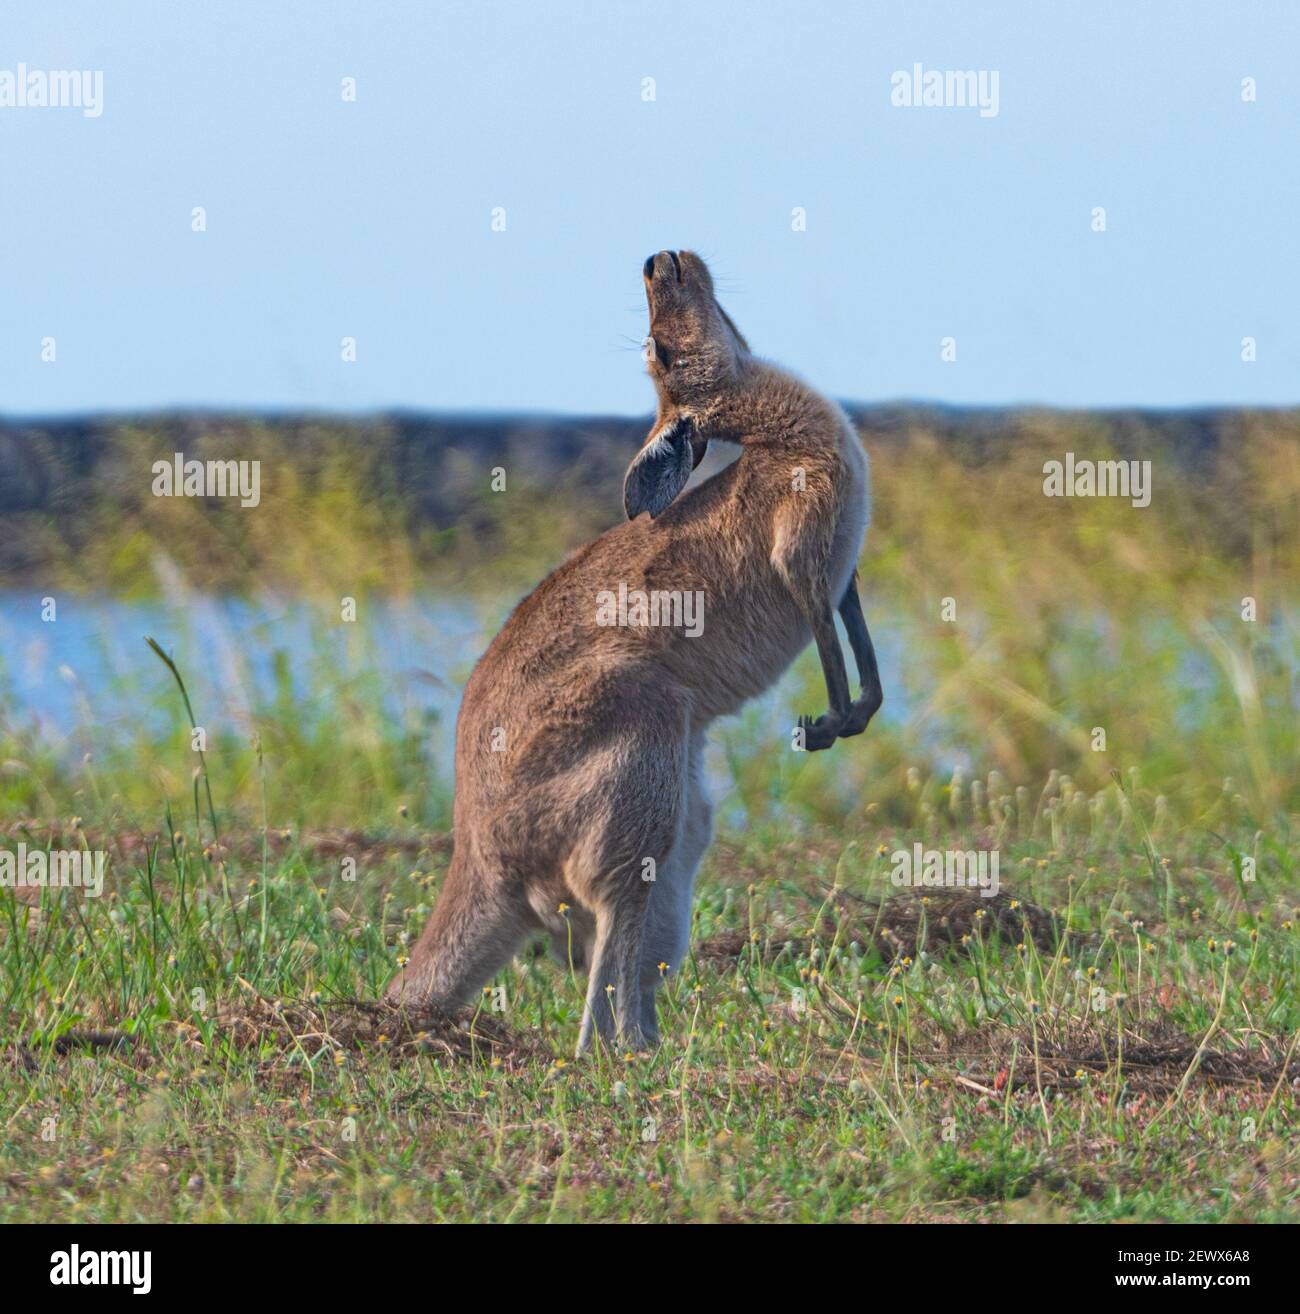 Behaviour shot of a female Eastern Grey Kangaroo (Macropus giganteus) regurgitating her food known as Merycism or rumination syndrome, Burnett Heads, Stock Photo